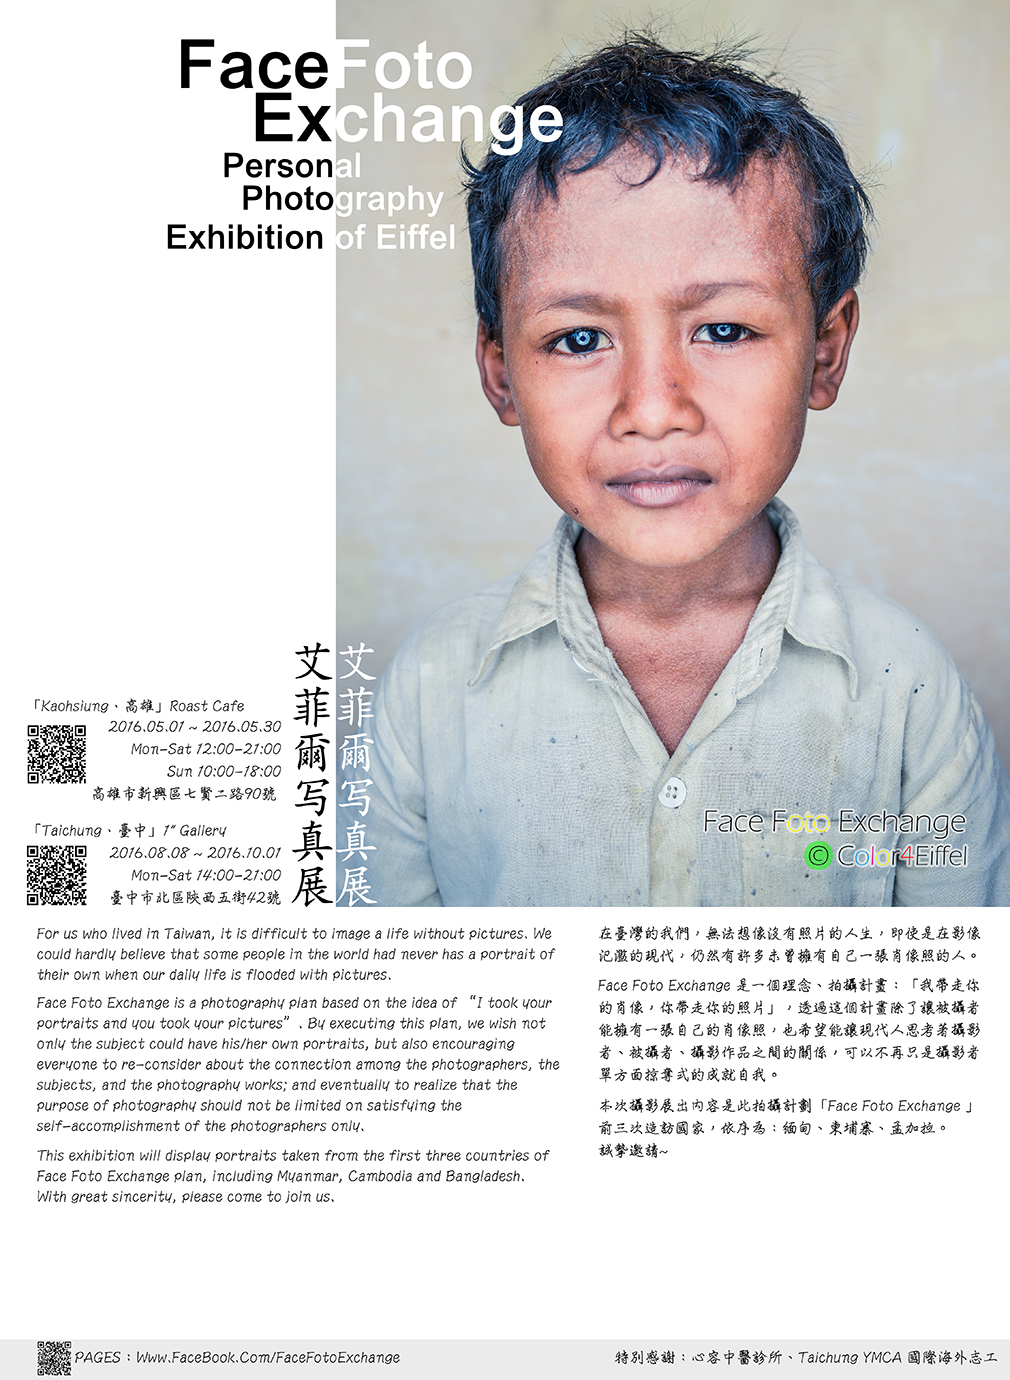 FaceFotoExchange/Personal Photography Exhibition